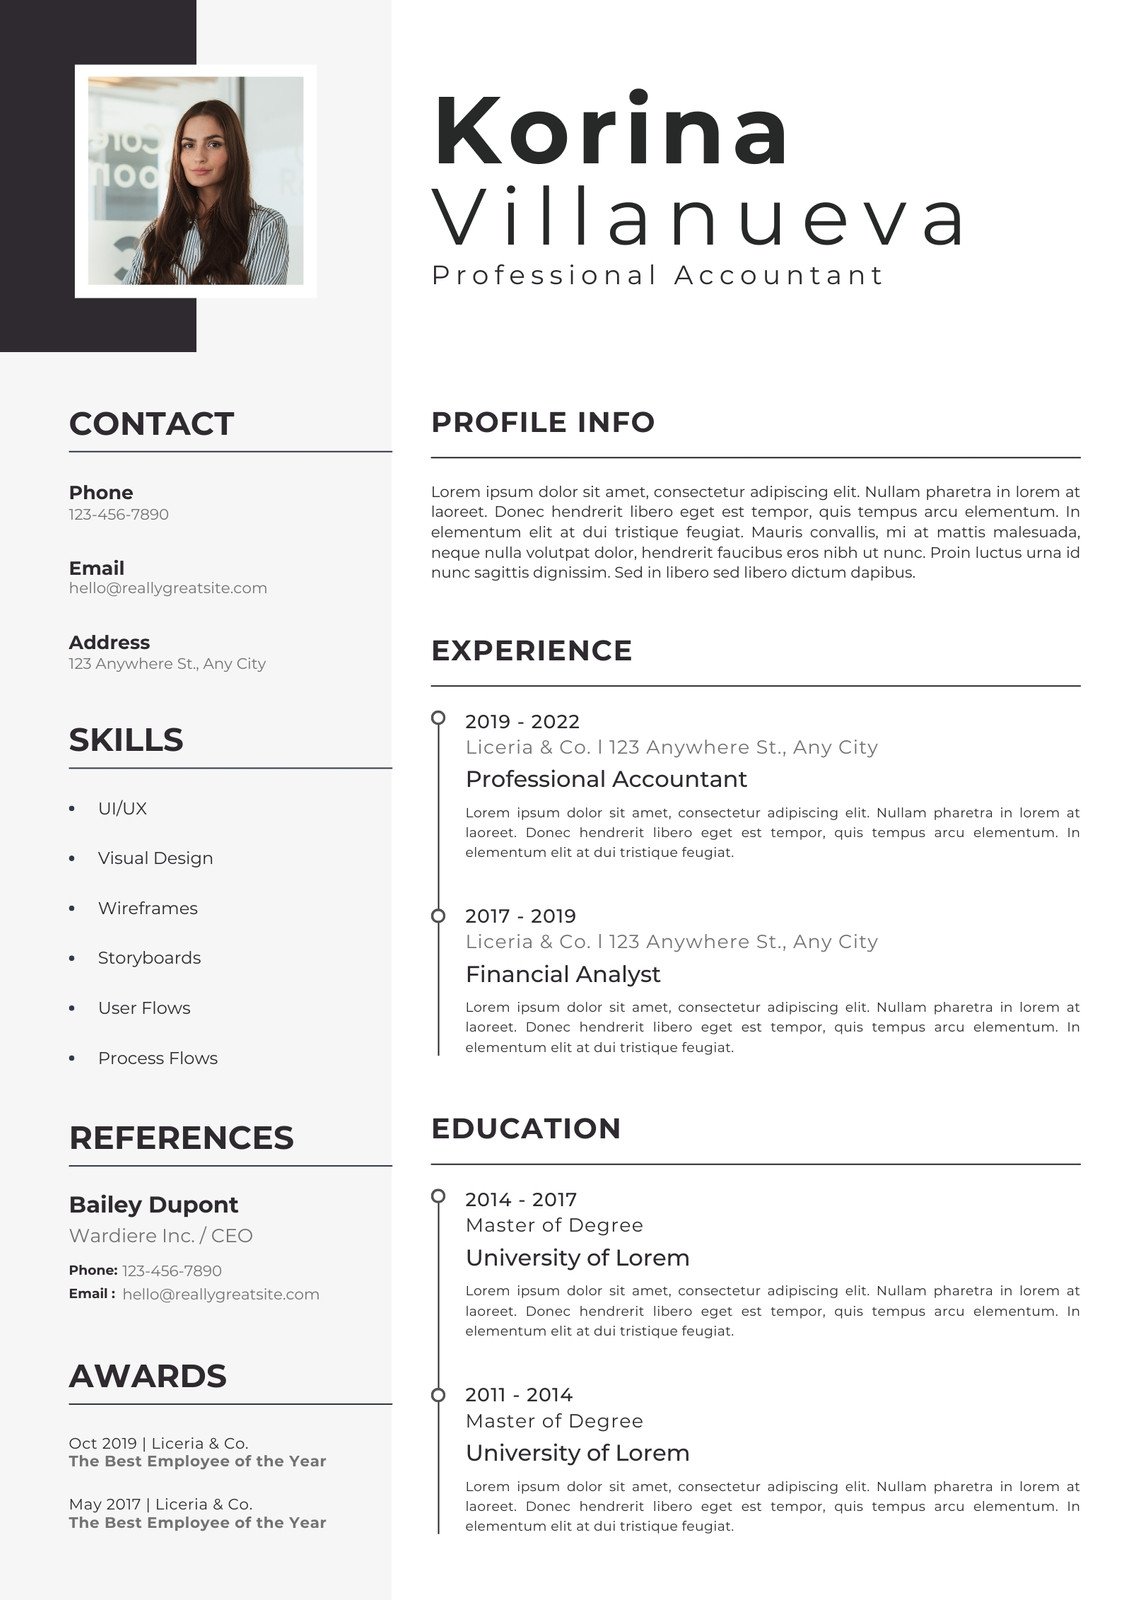 infographic resume finance